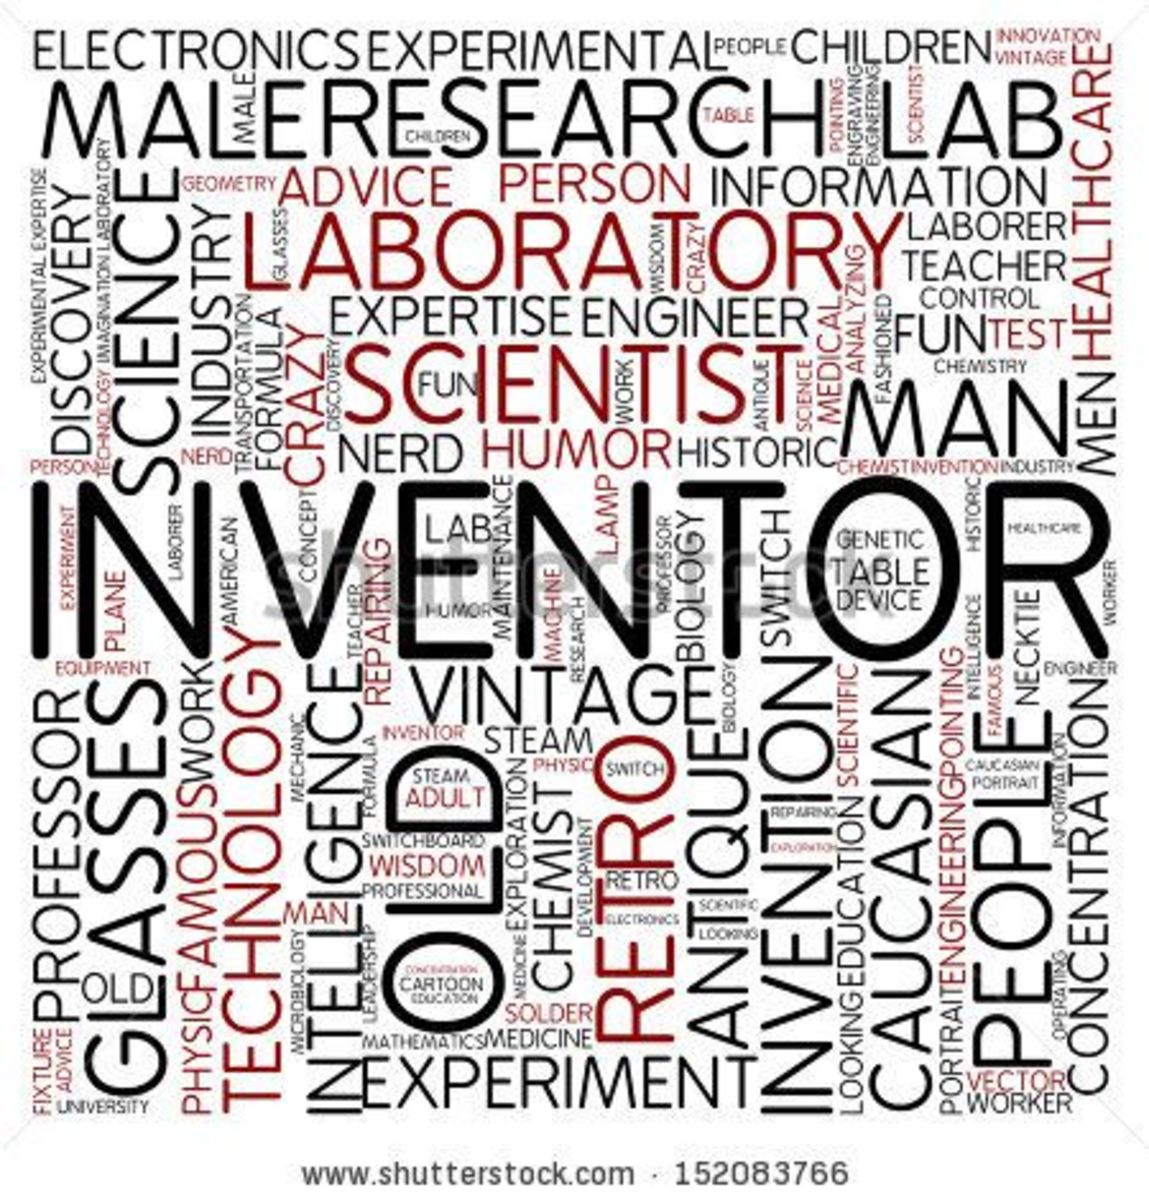 Best black Americans Inventors, Doctors and Scientists